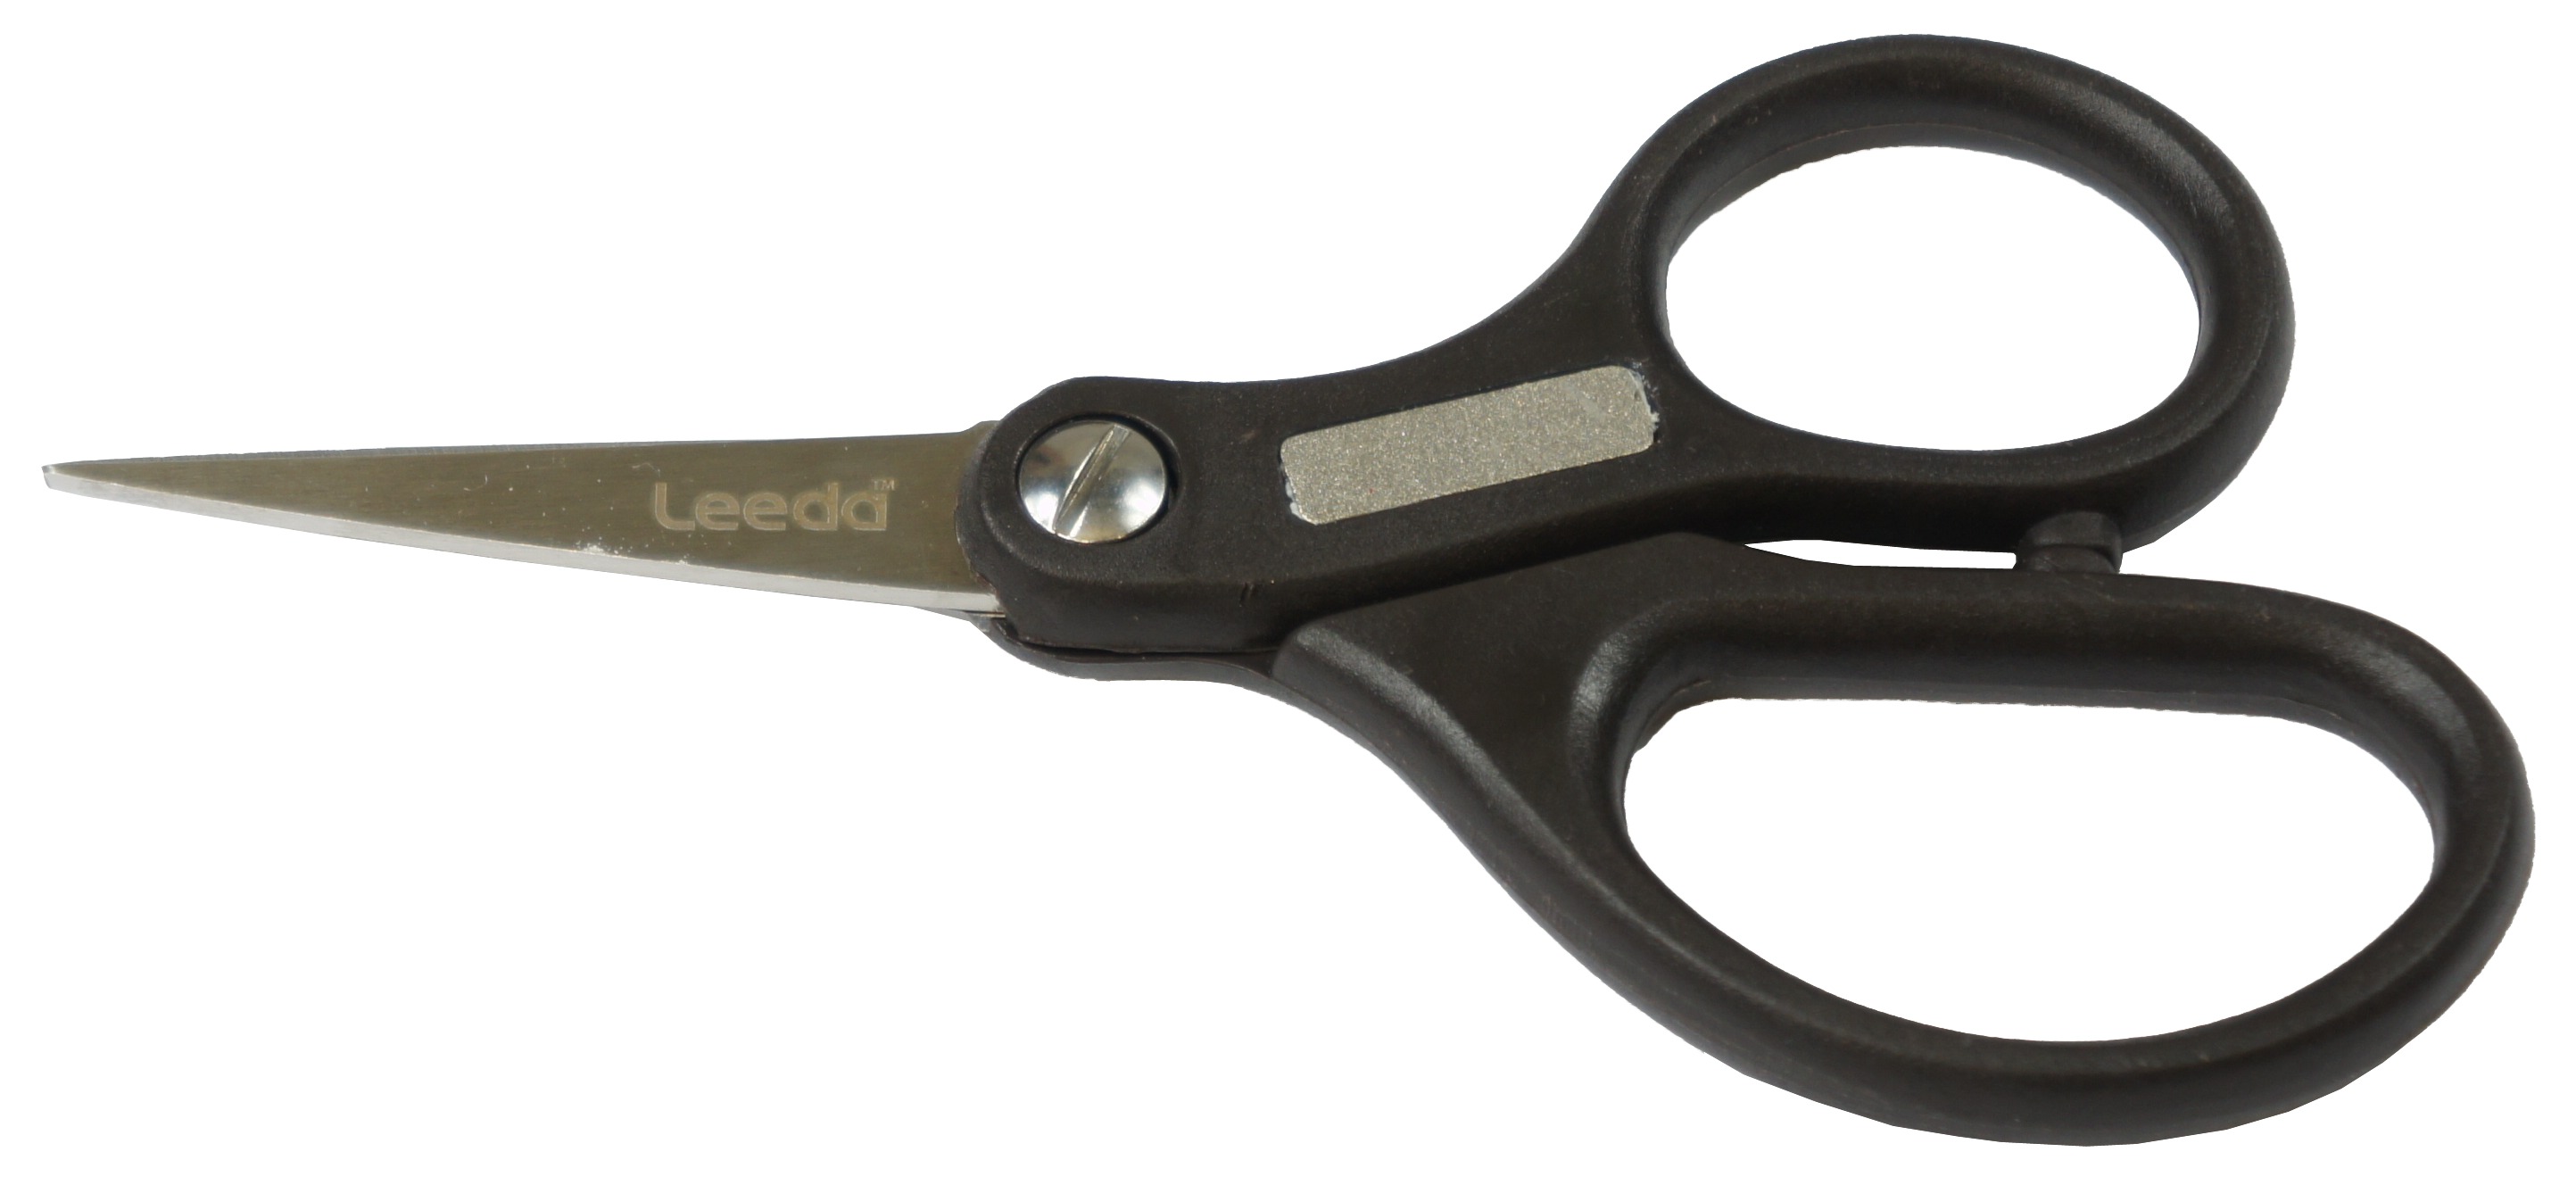 Leeda Cutting Edge Scissors – Glasgow Angling Centre